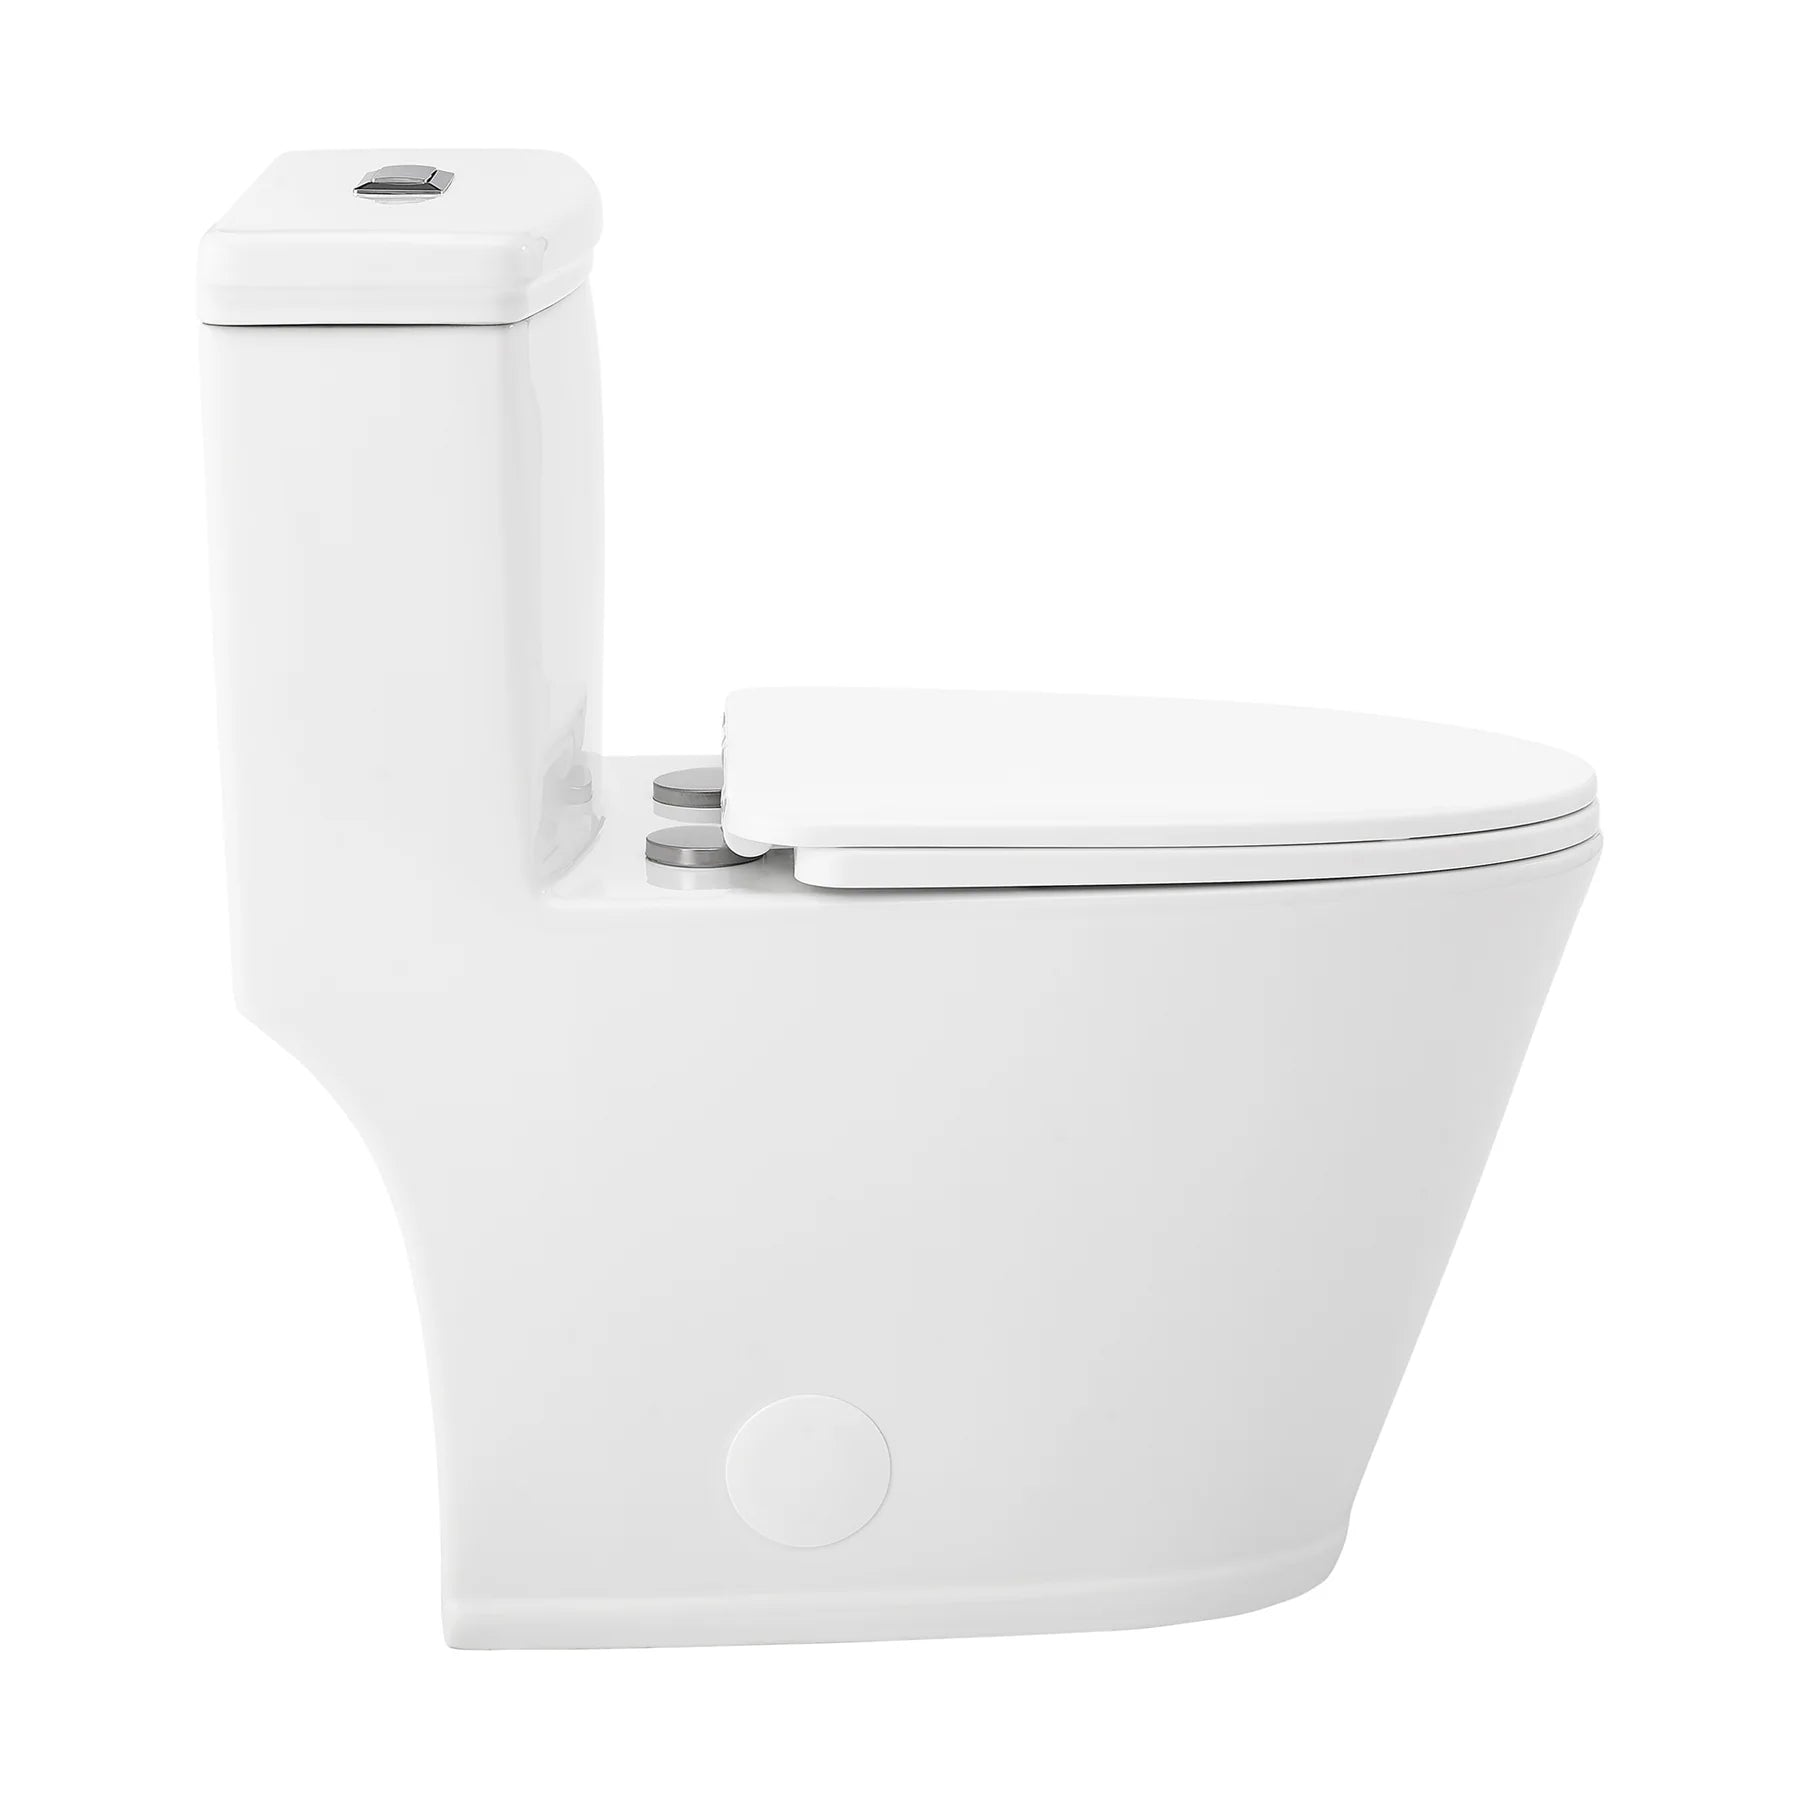 Swiss Madison Beau ?One-Piece Elongated Toilet Vortex? Dual-Flush 1.1/1.6 gpf - SM-1T115